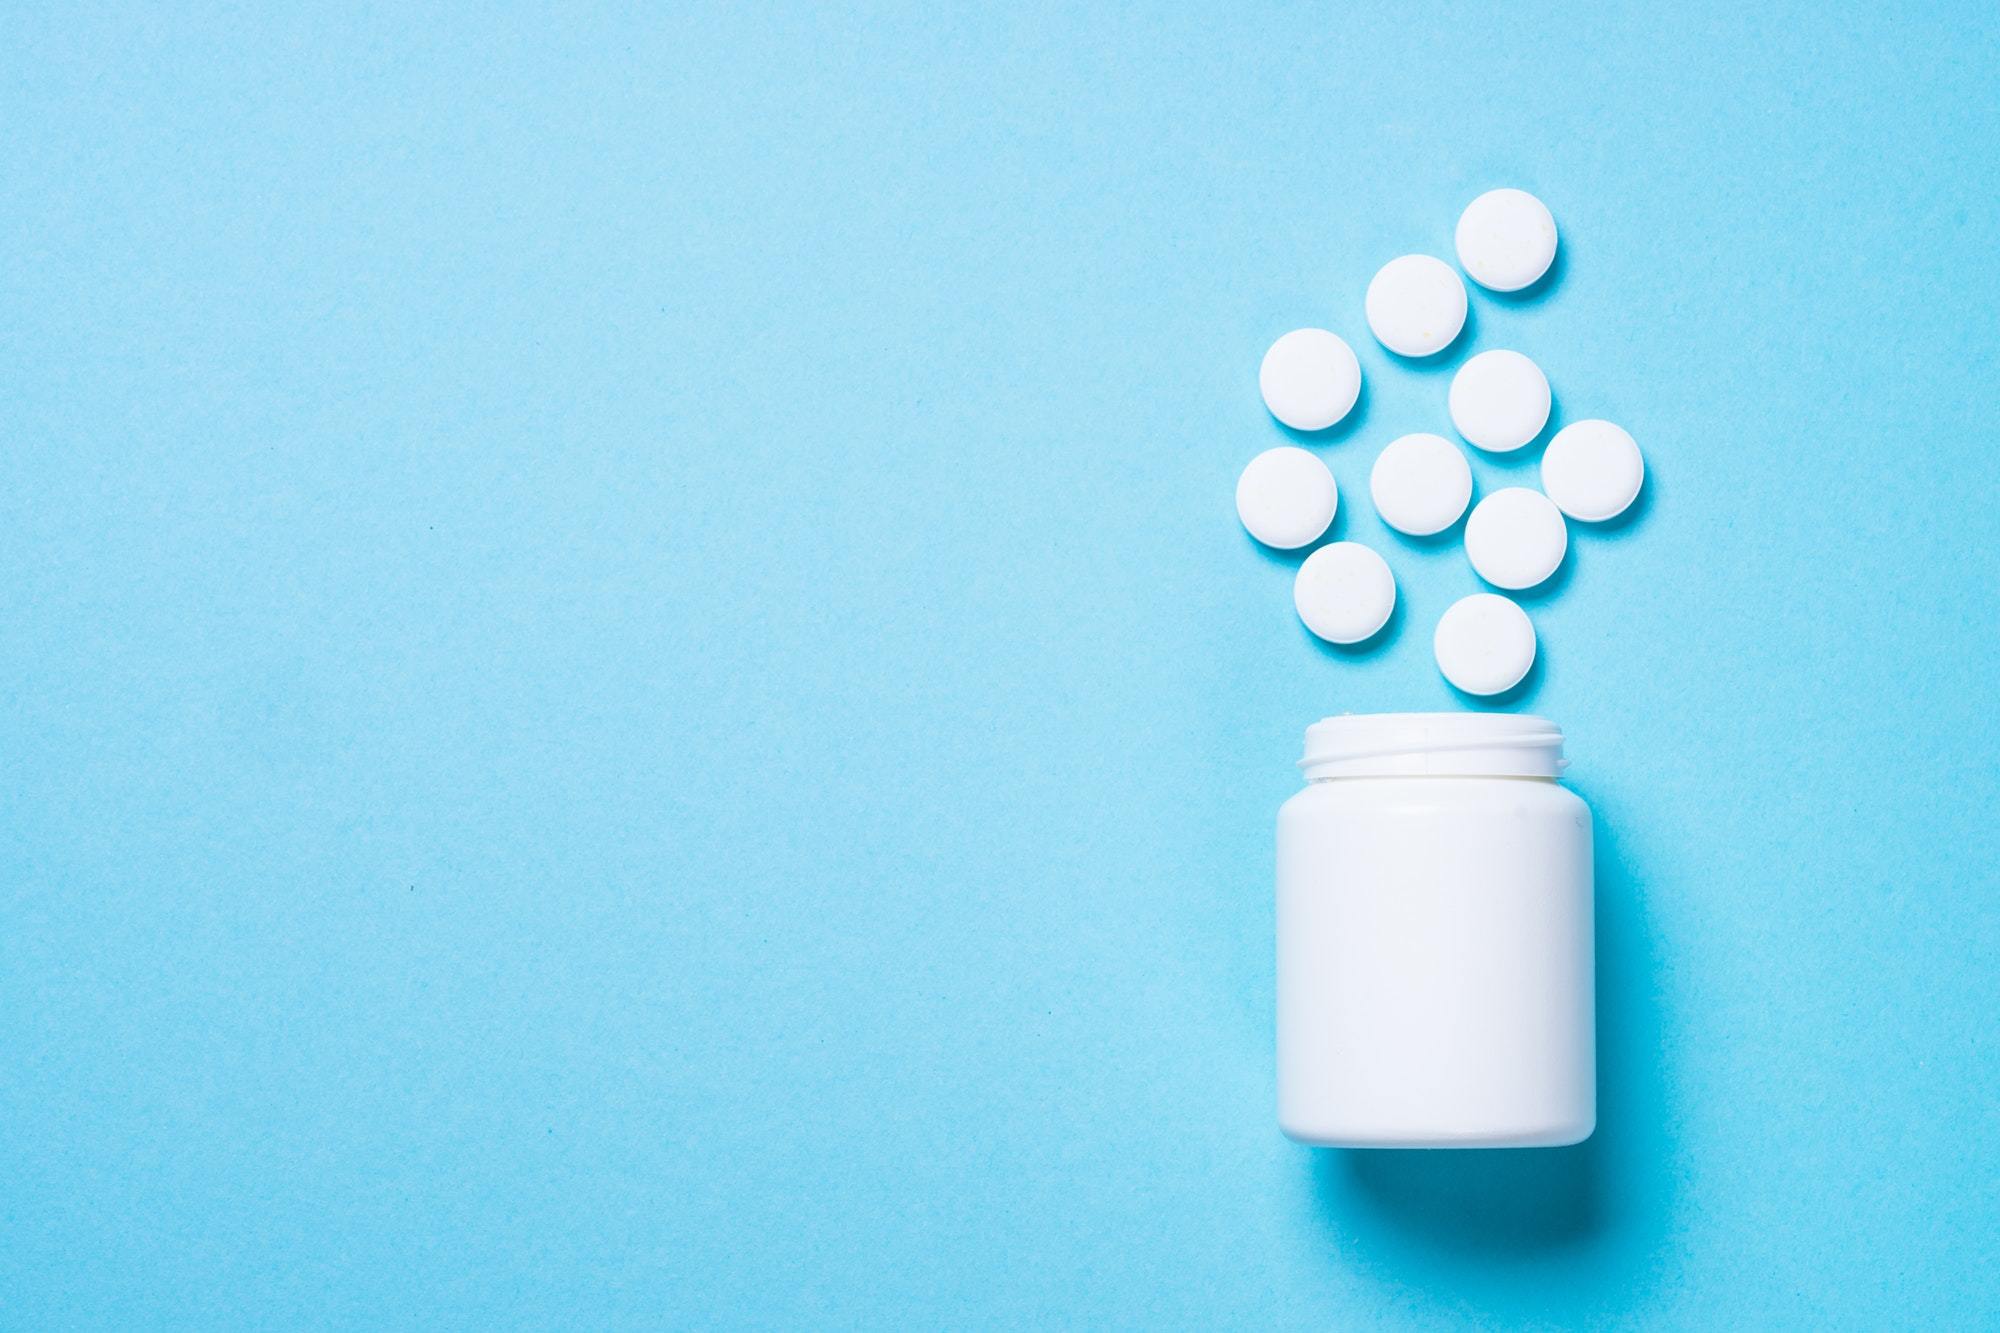 Aspirin for Heart Health, Should You Take It?